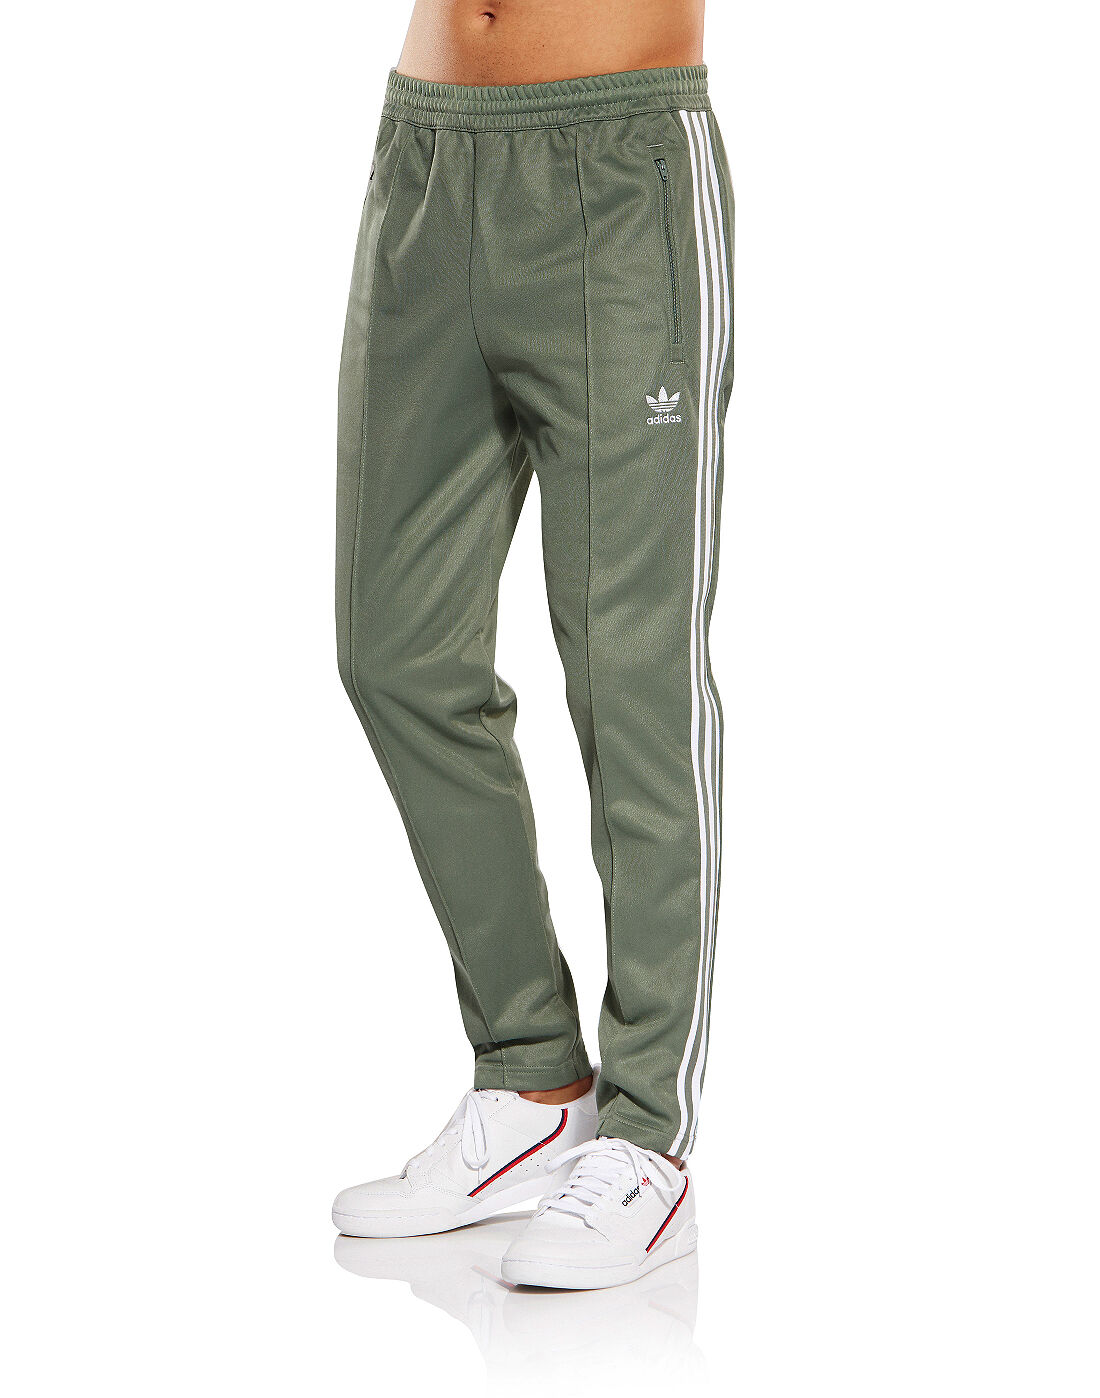 Men's adidas Originals Beckenbauer Track Pants | Life Style Sports